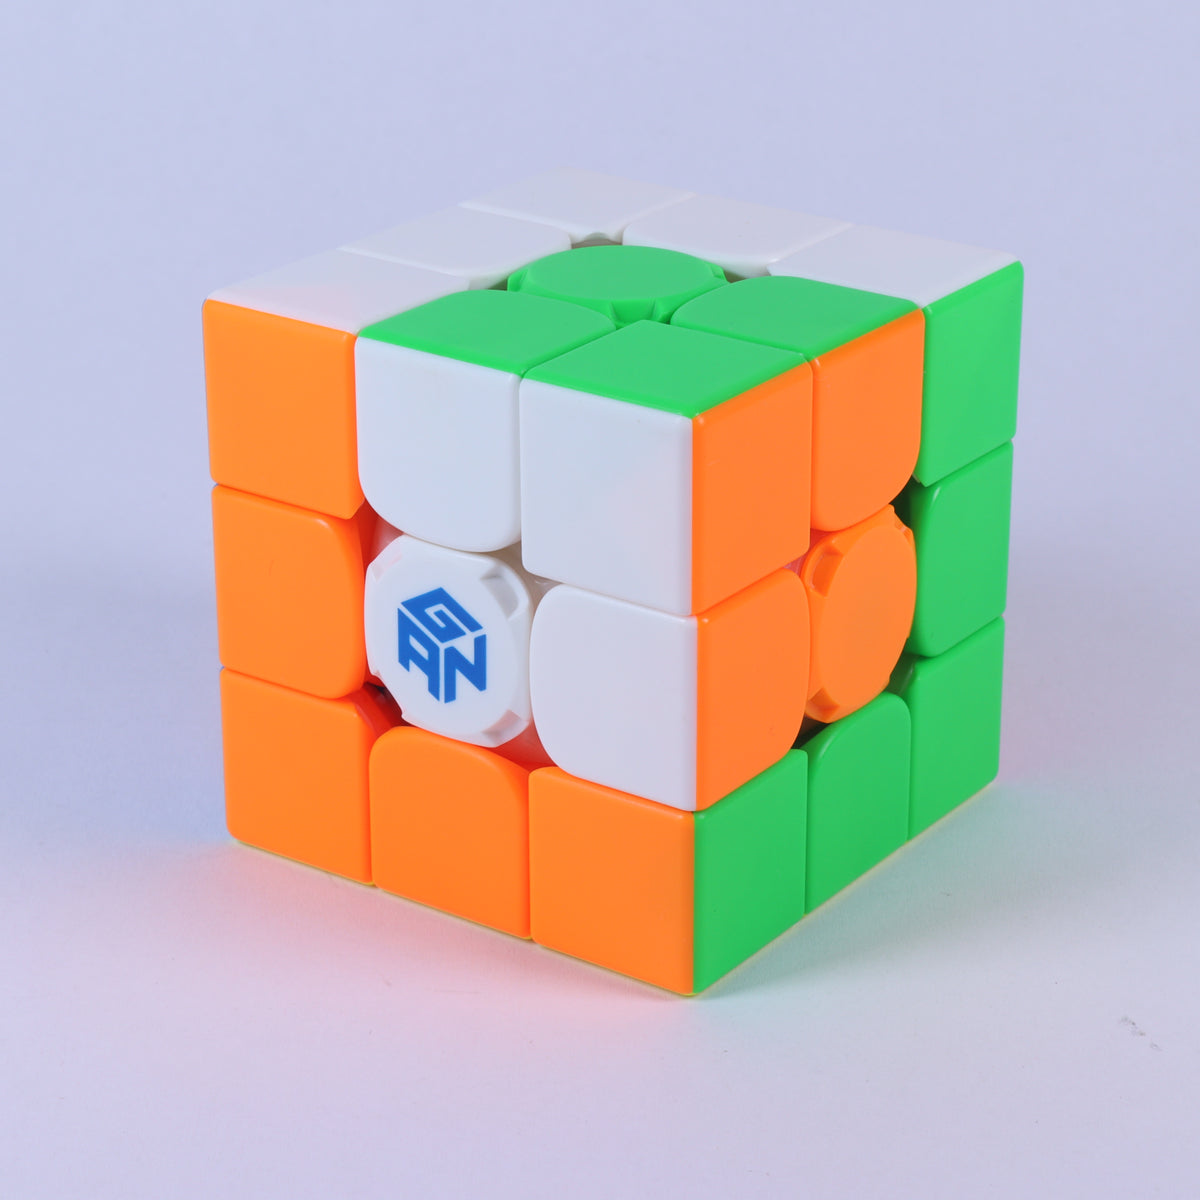 Cool 3x3 Rubik's Cube Patterns